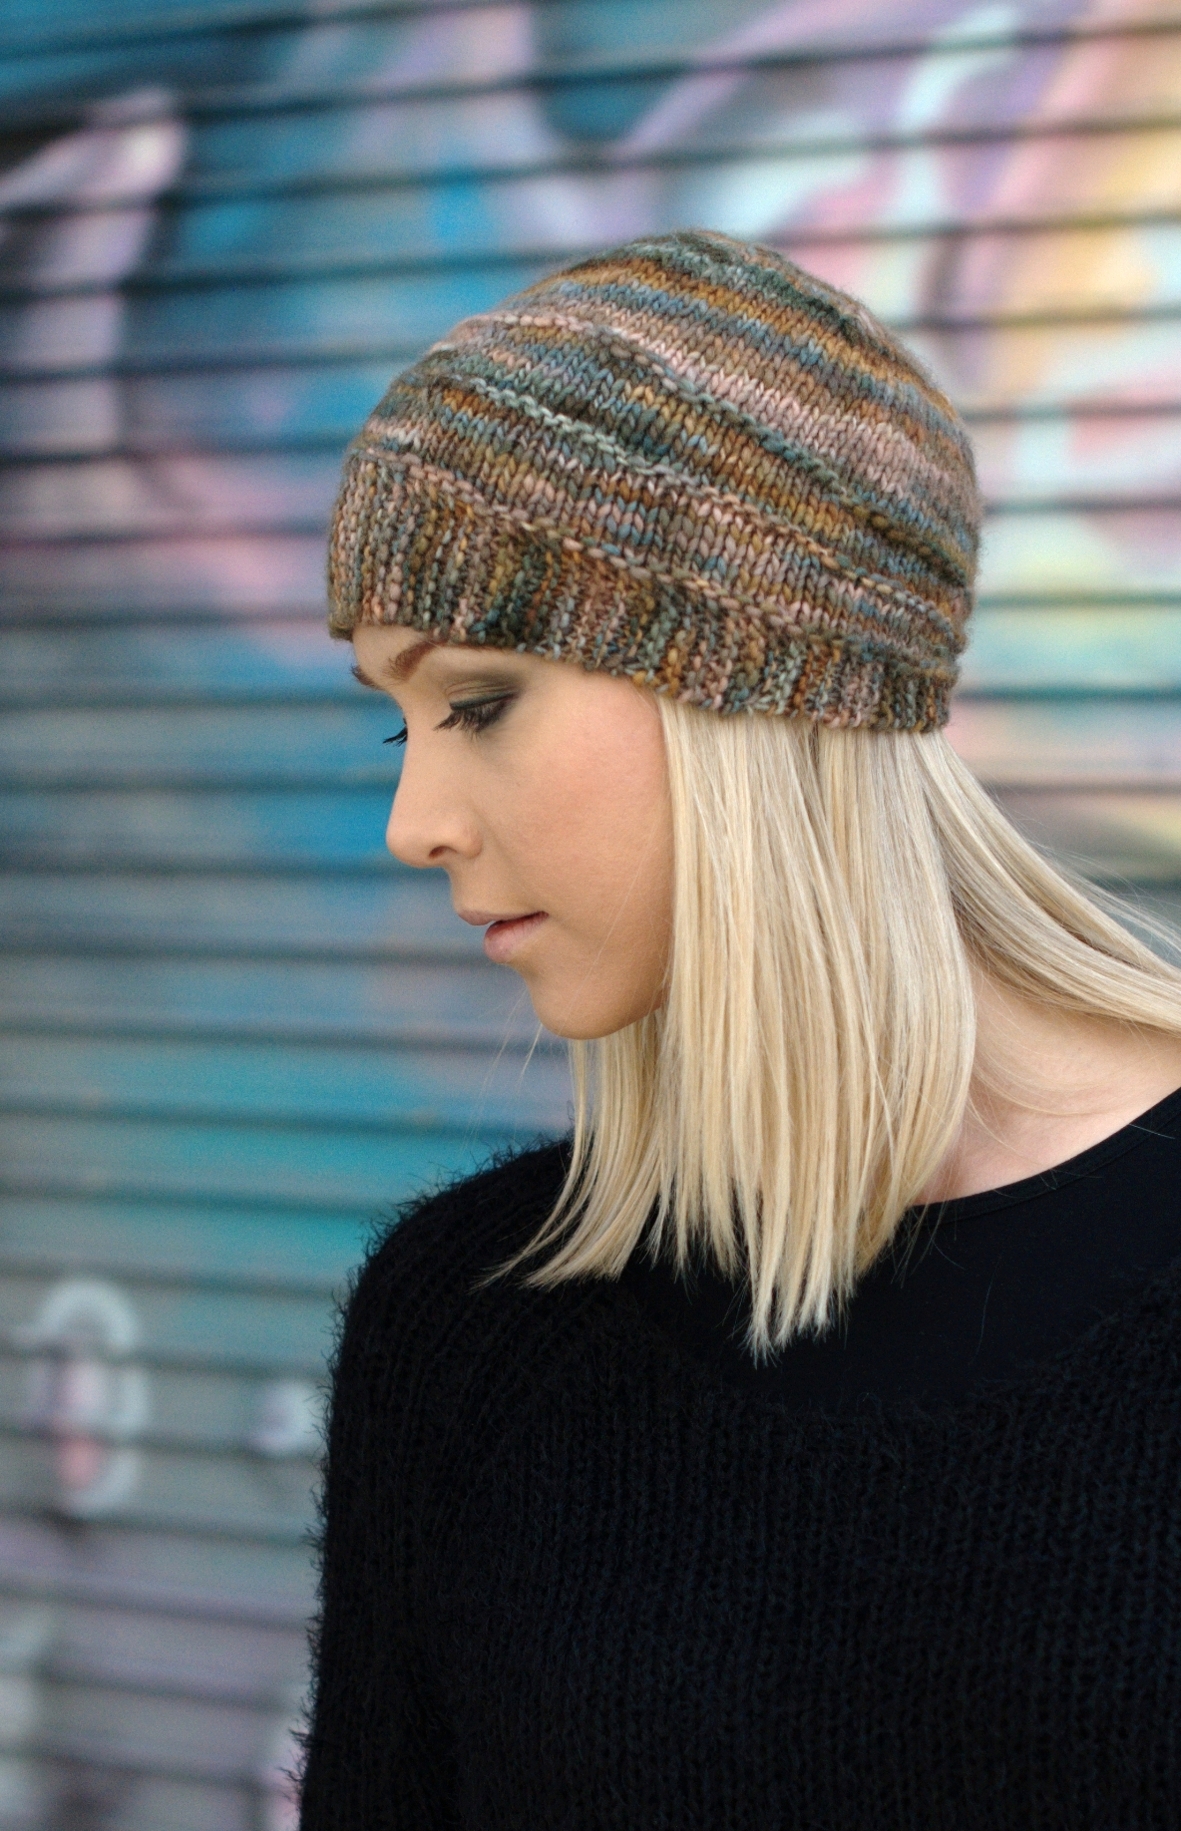 Quoin cloche Hat knitting pattern